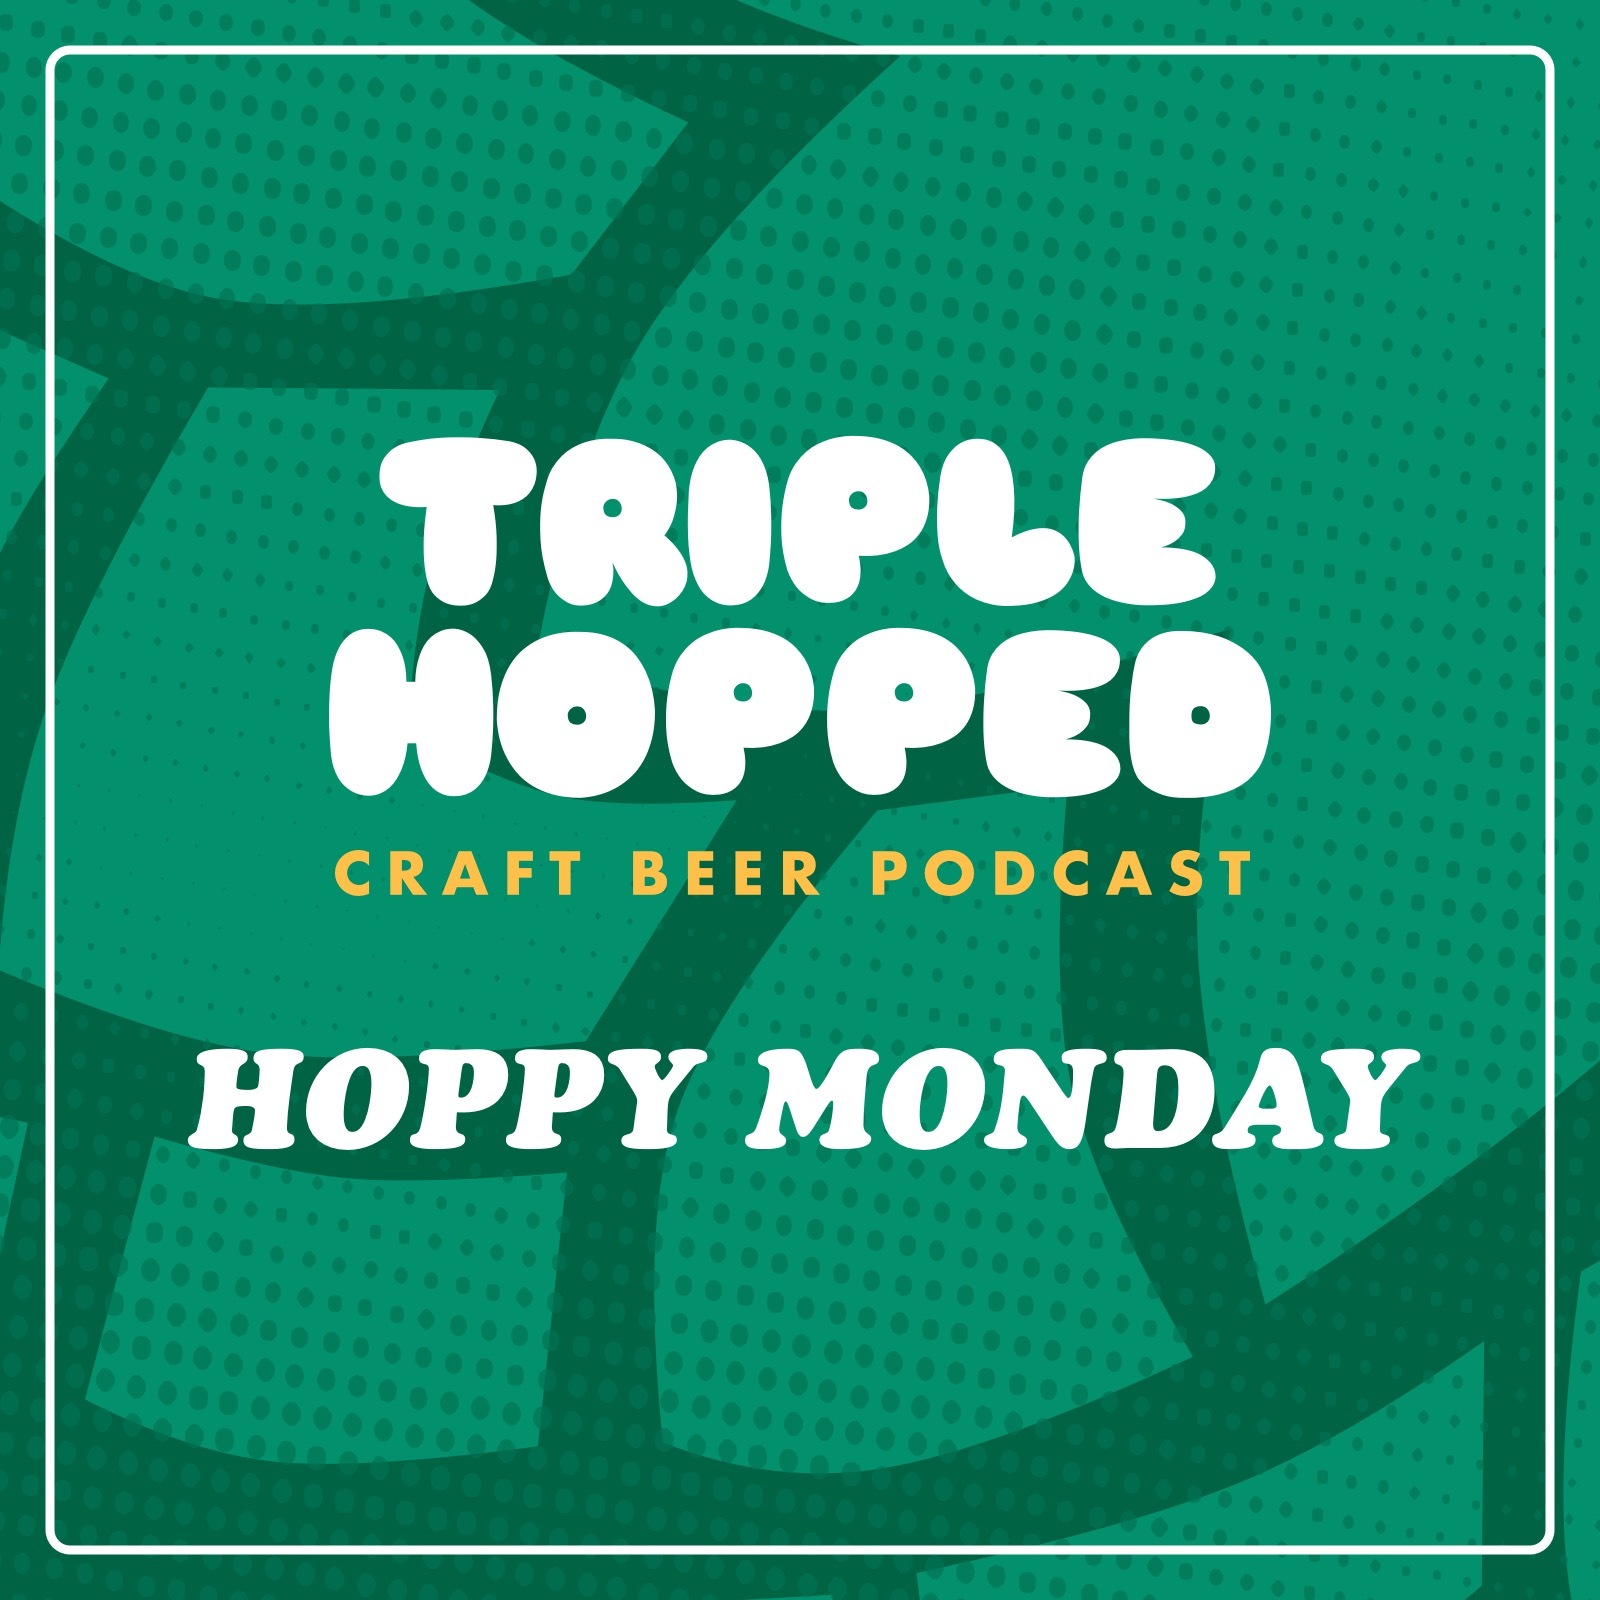 Hoppy Monday